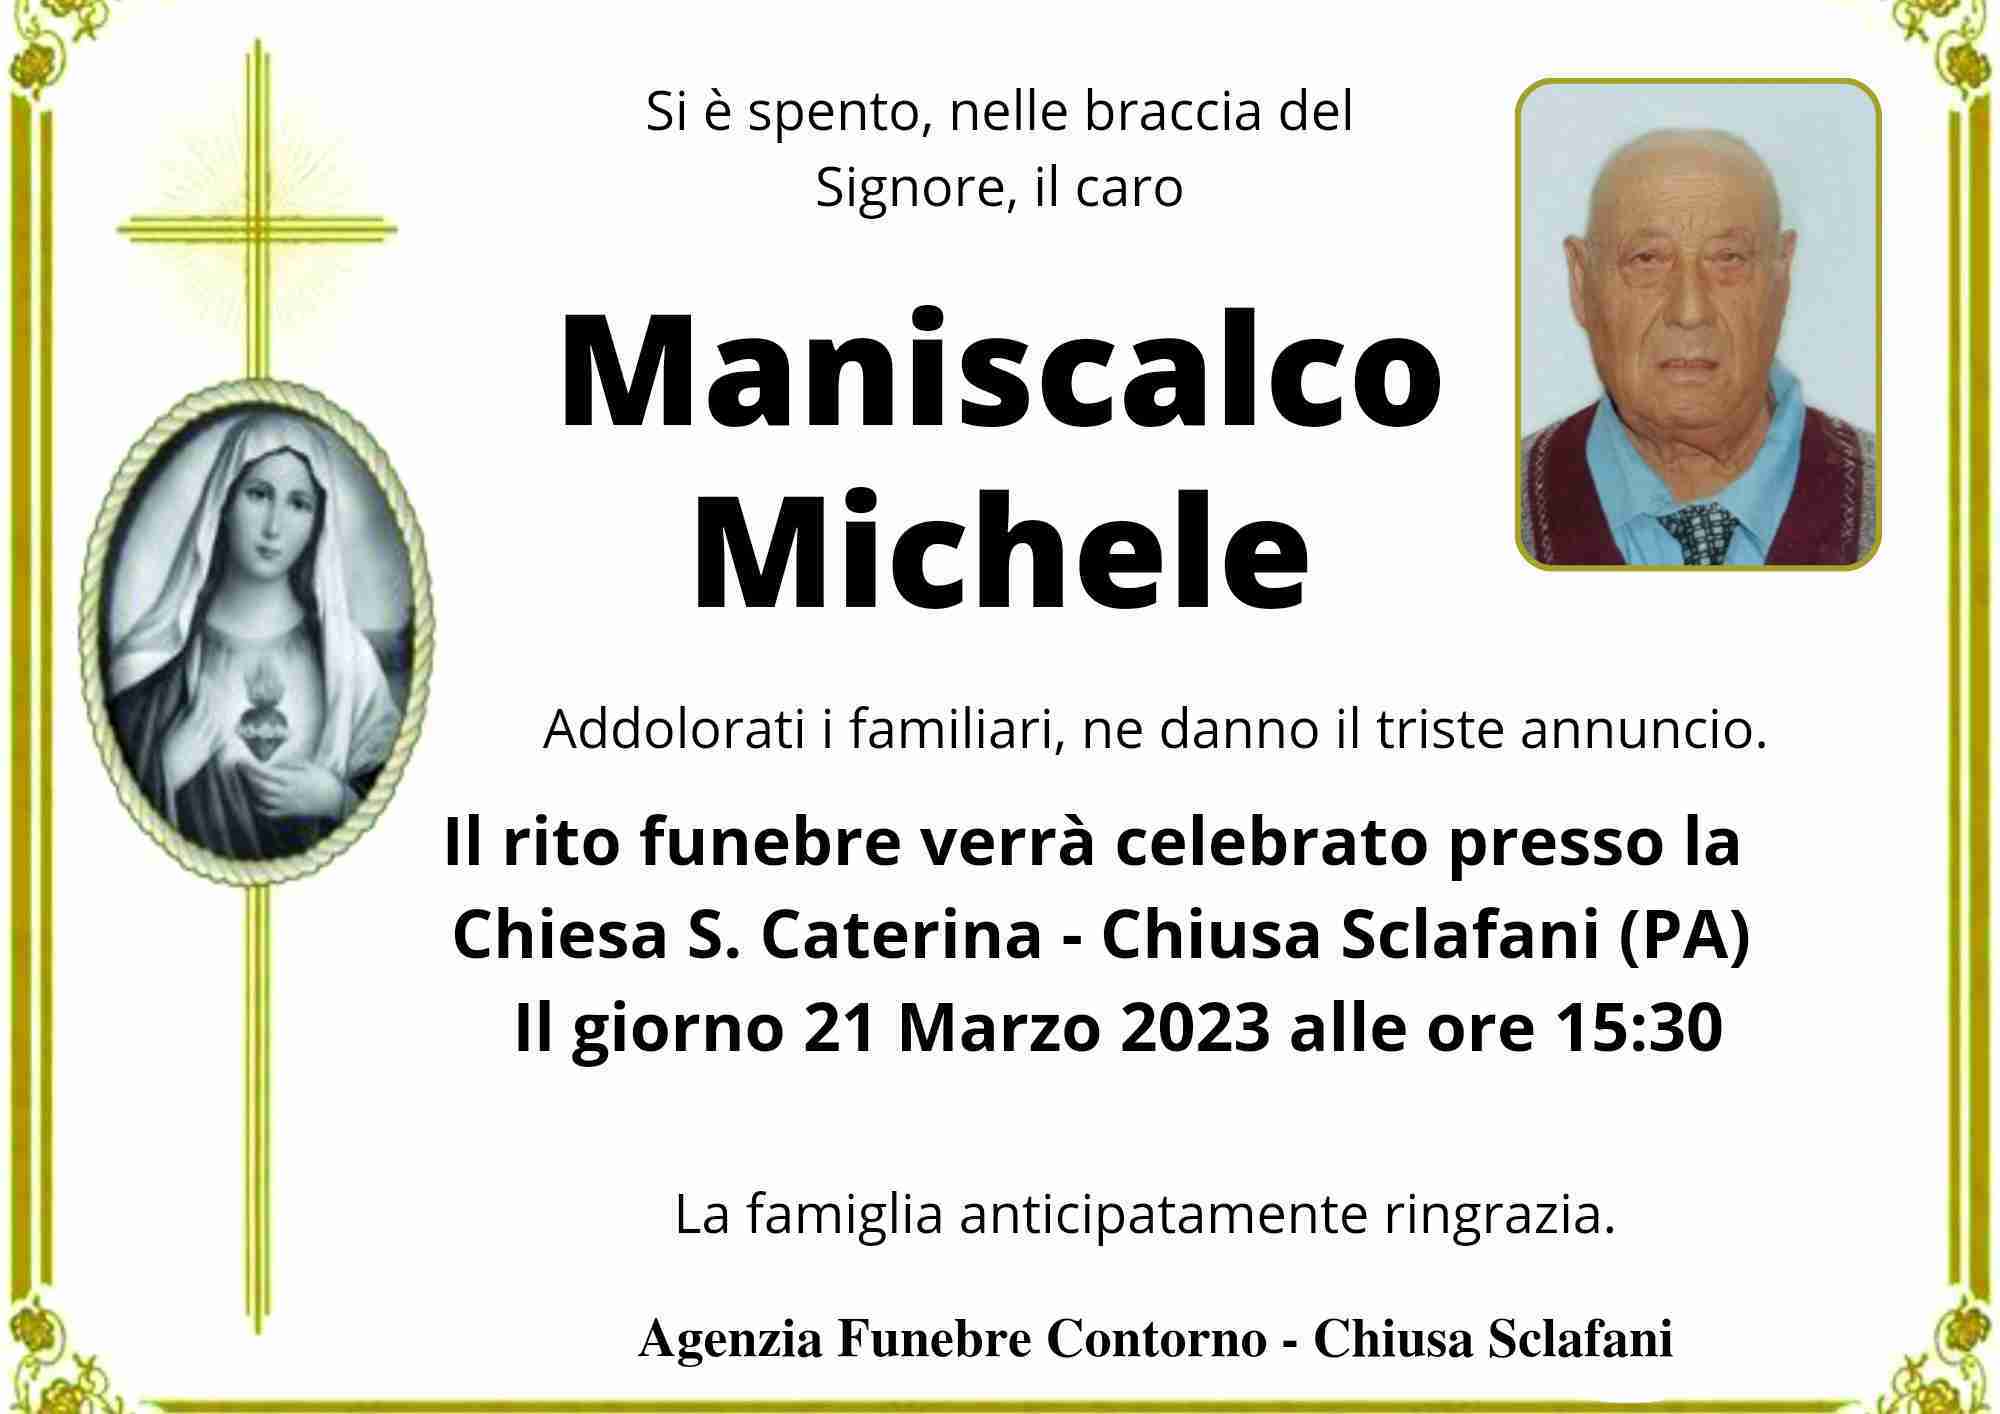 Michele Maniscalco